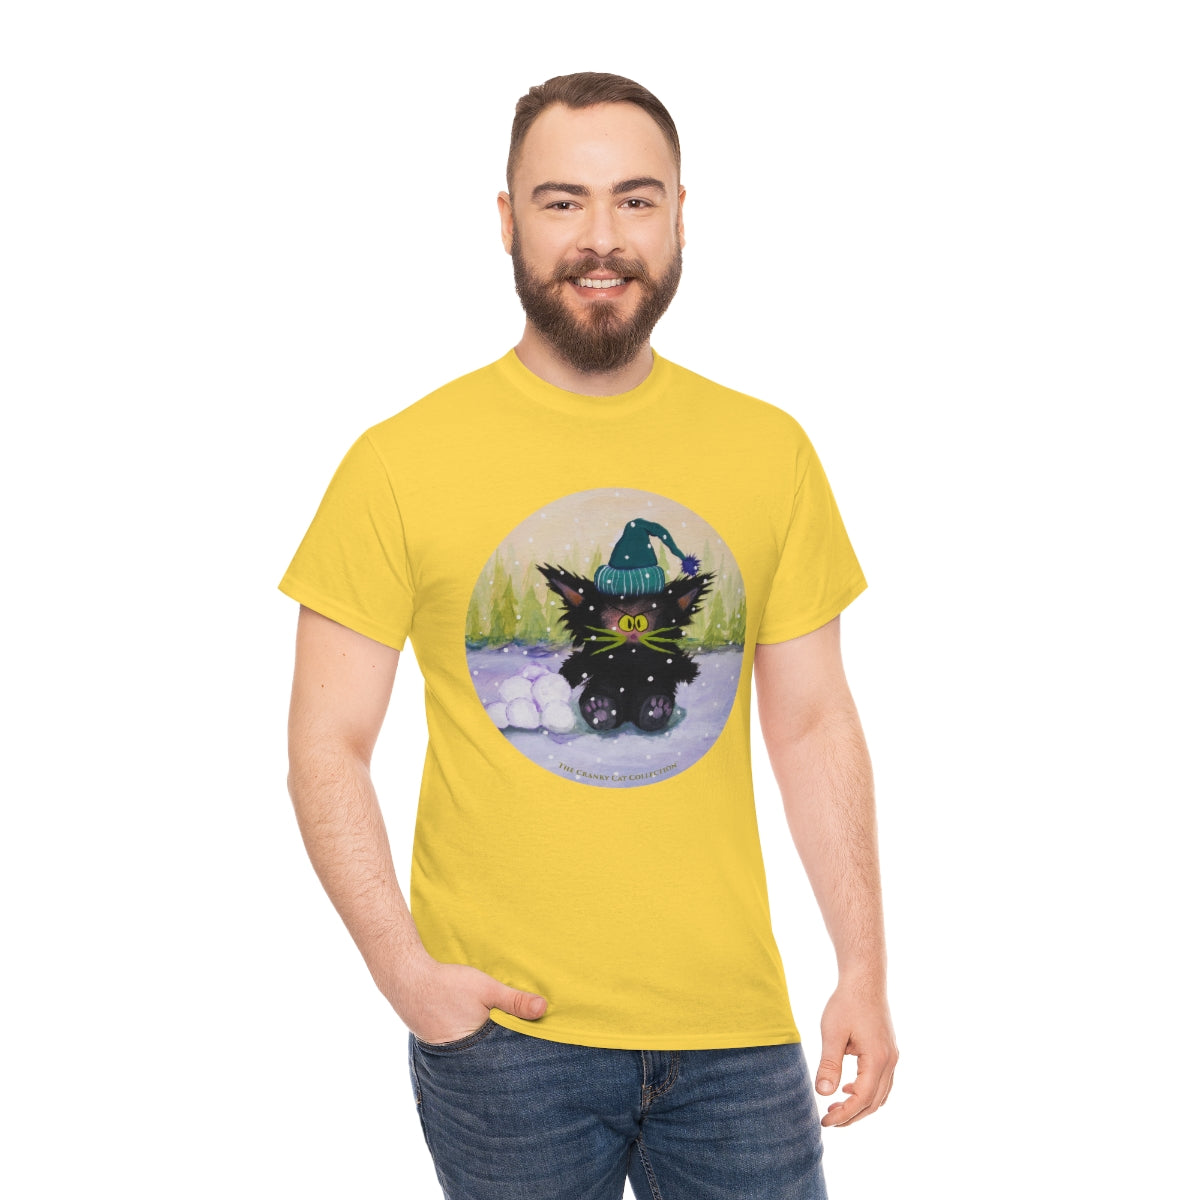 Cranky Cat WInter-Themed T-Shirt -  Free Shipping!